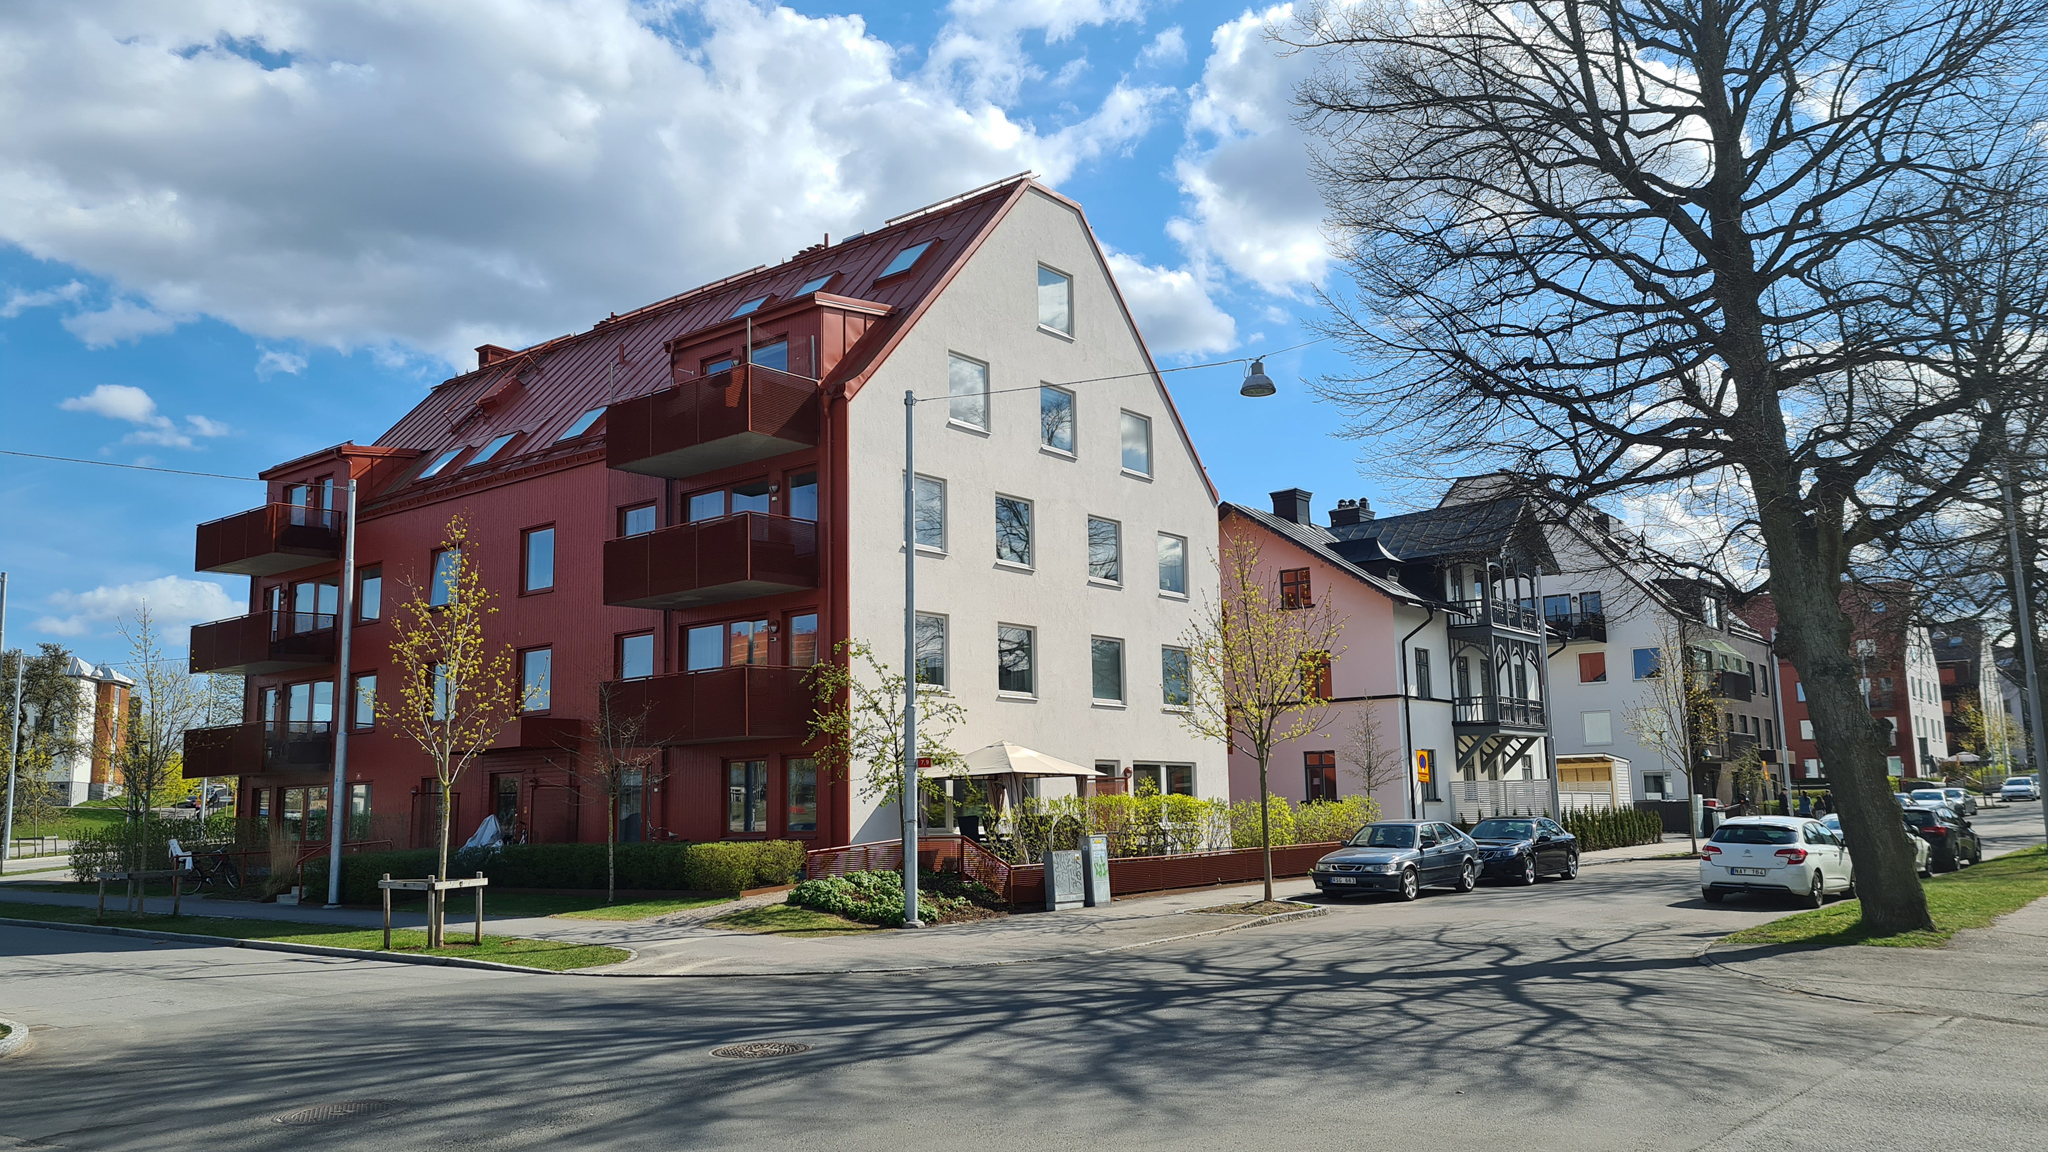 Flerfamiljshus i kvarteret Ormen år 2021. Foto: Peter Kristensson/Klingsbergs Förlag